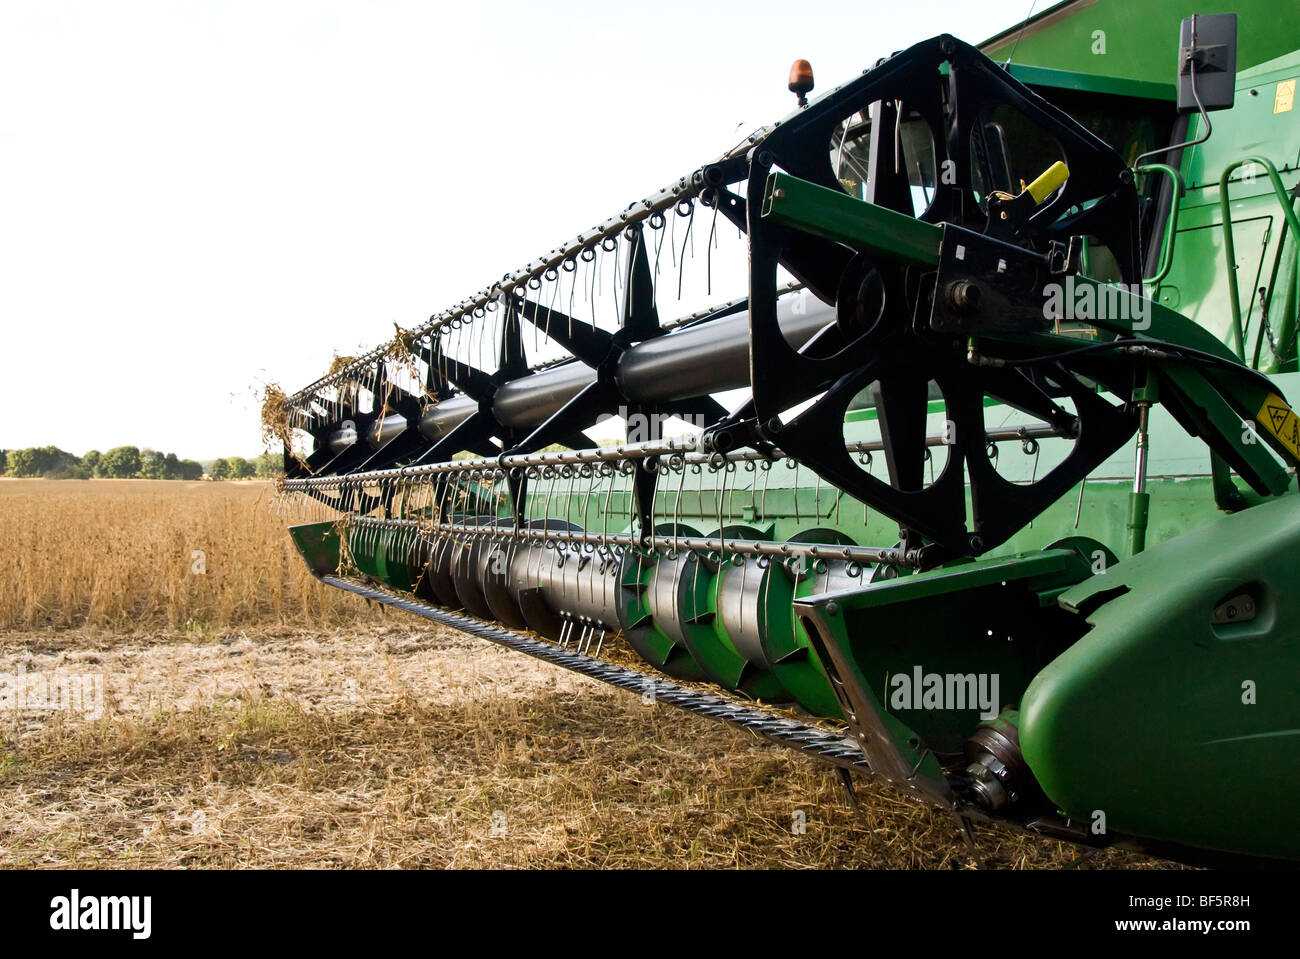 Cosechadora John Deere cosechar soja, Ucrania Foto de stock